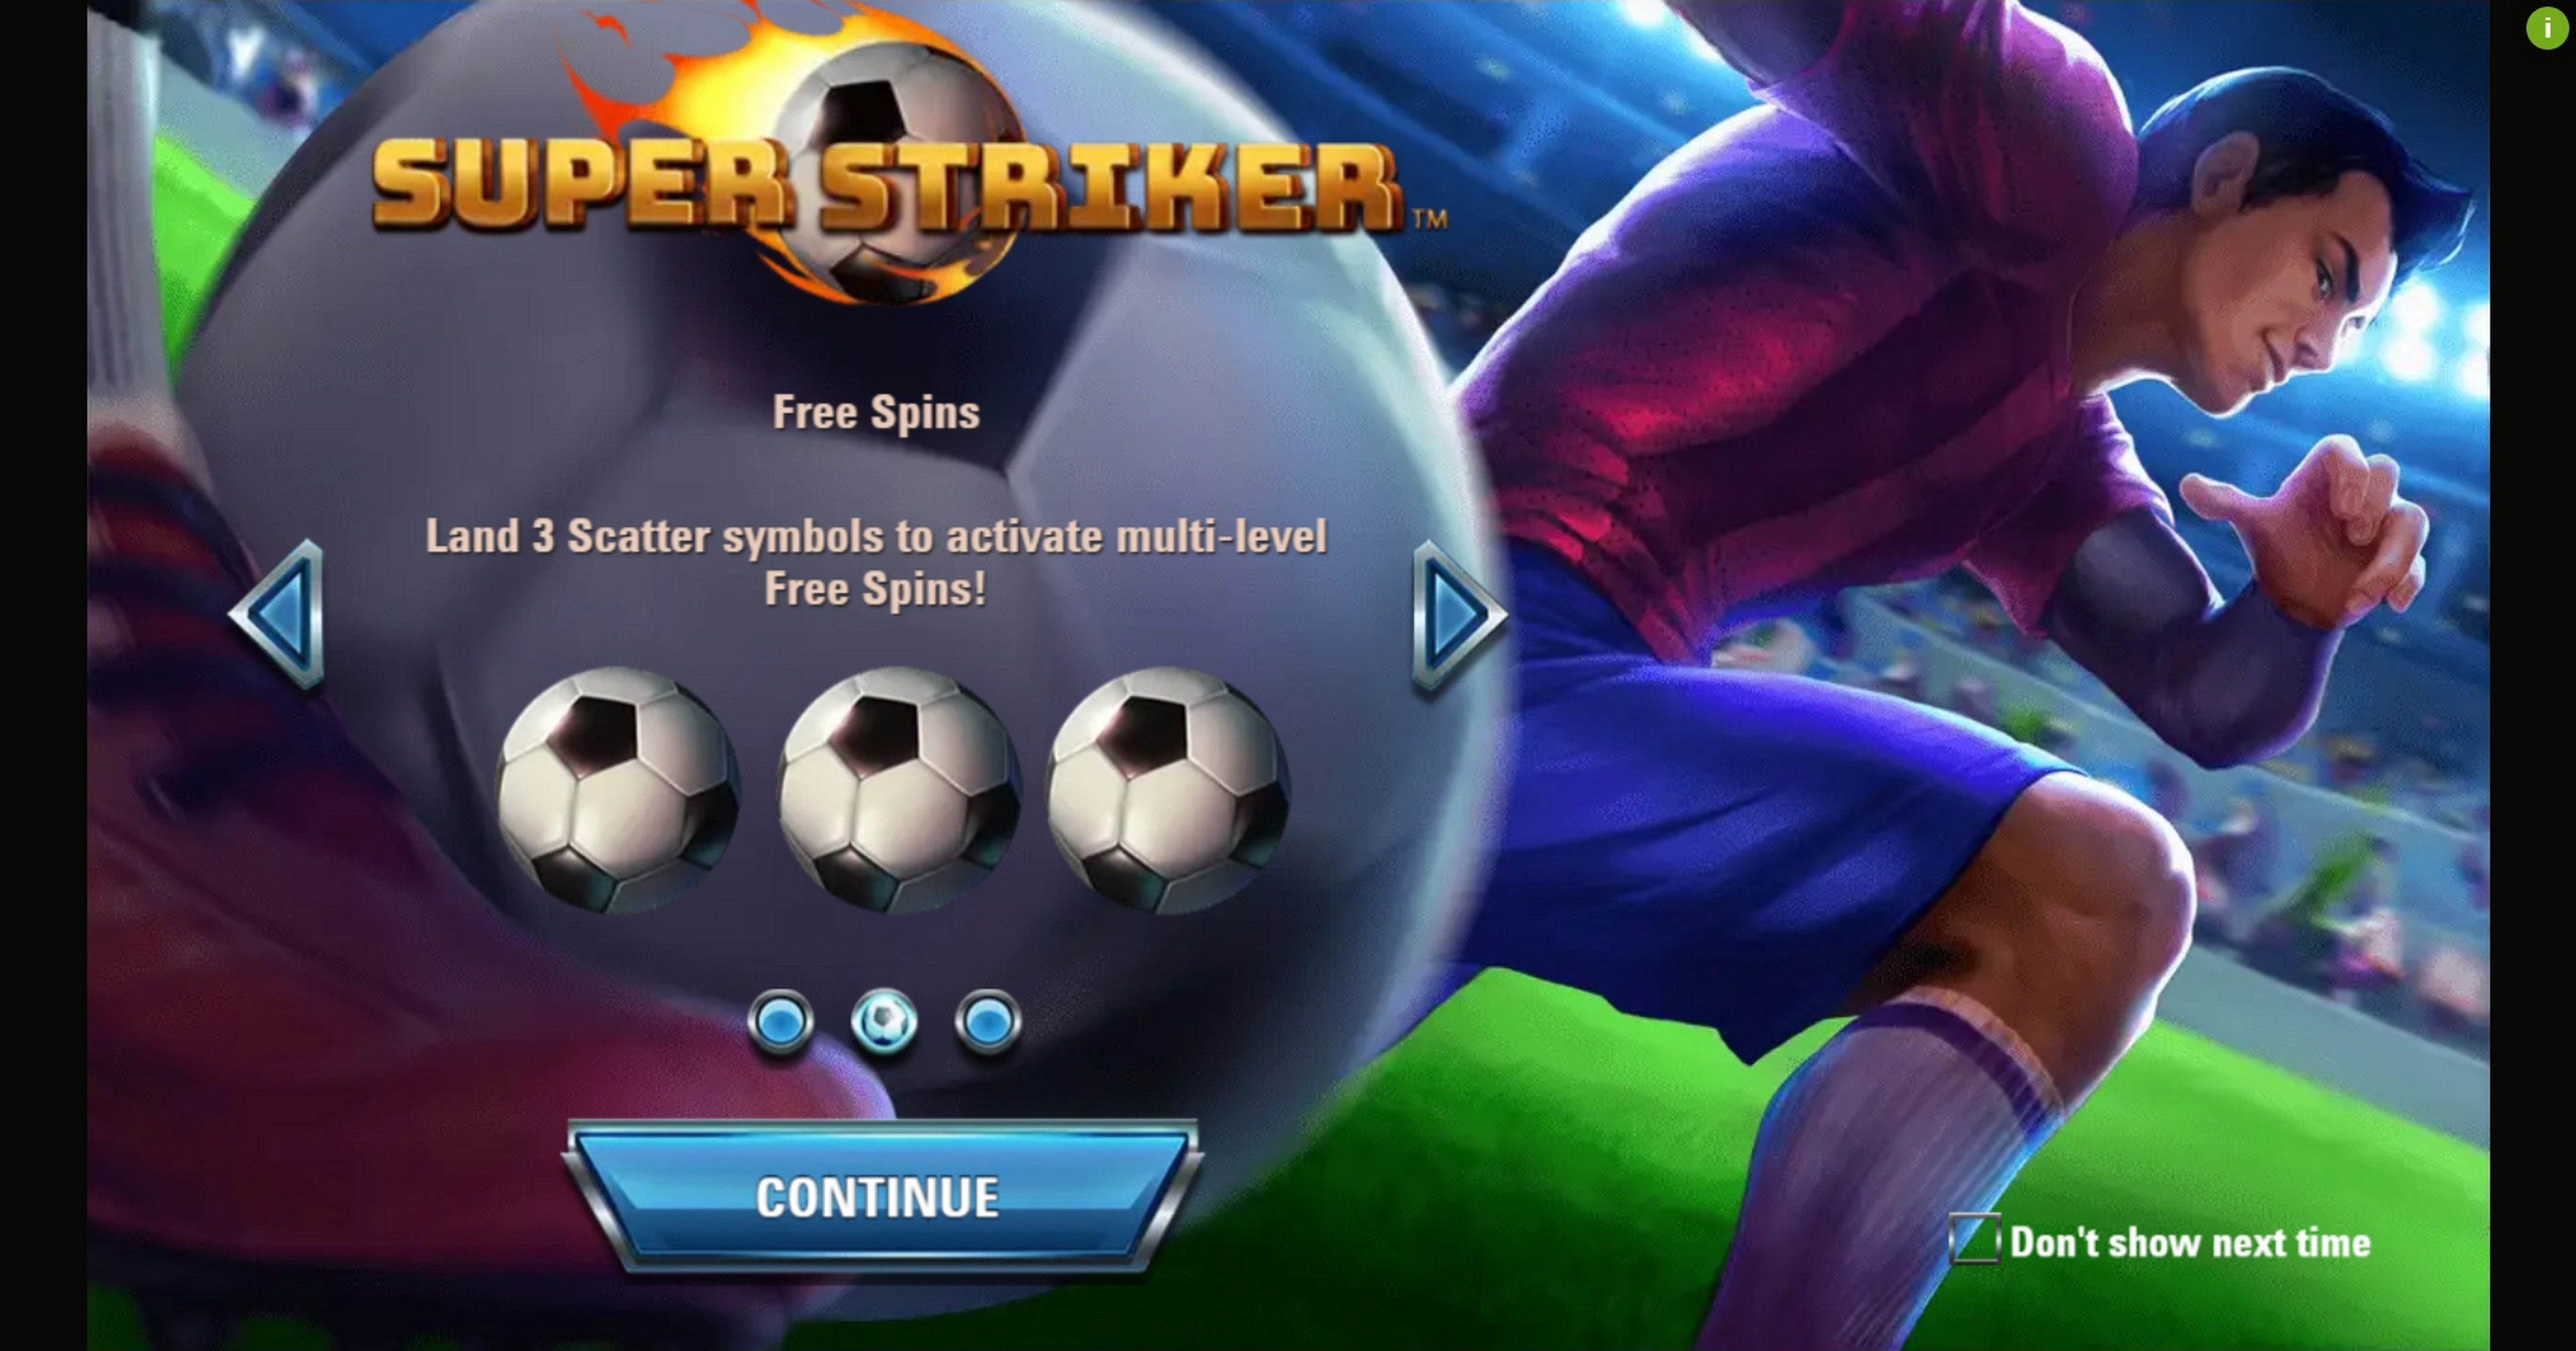 Play Super Striker Free Casino Slot Game by NetEnt